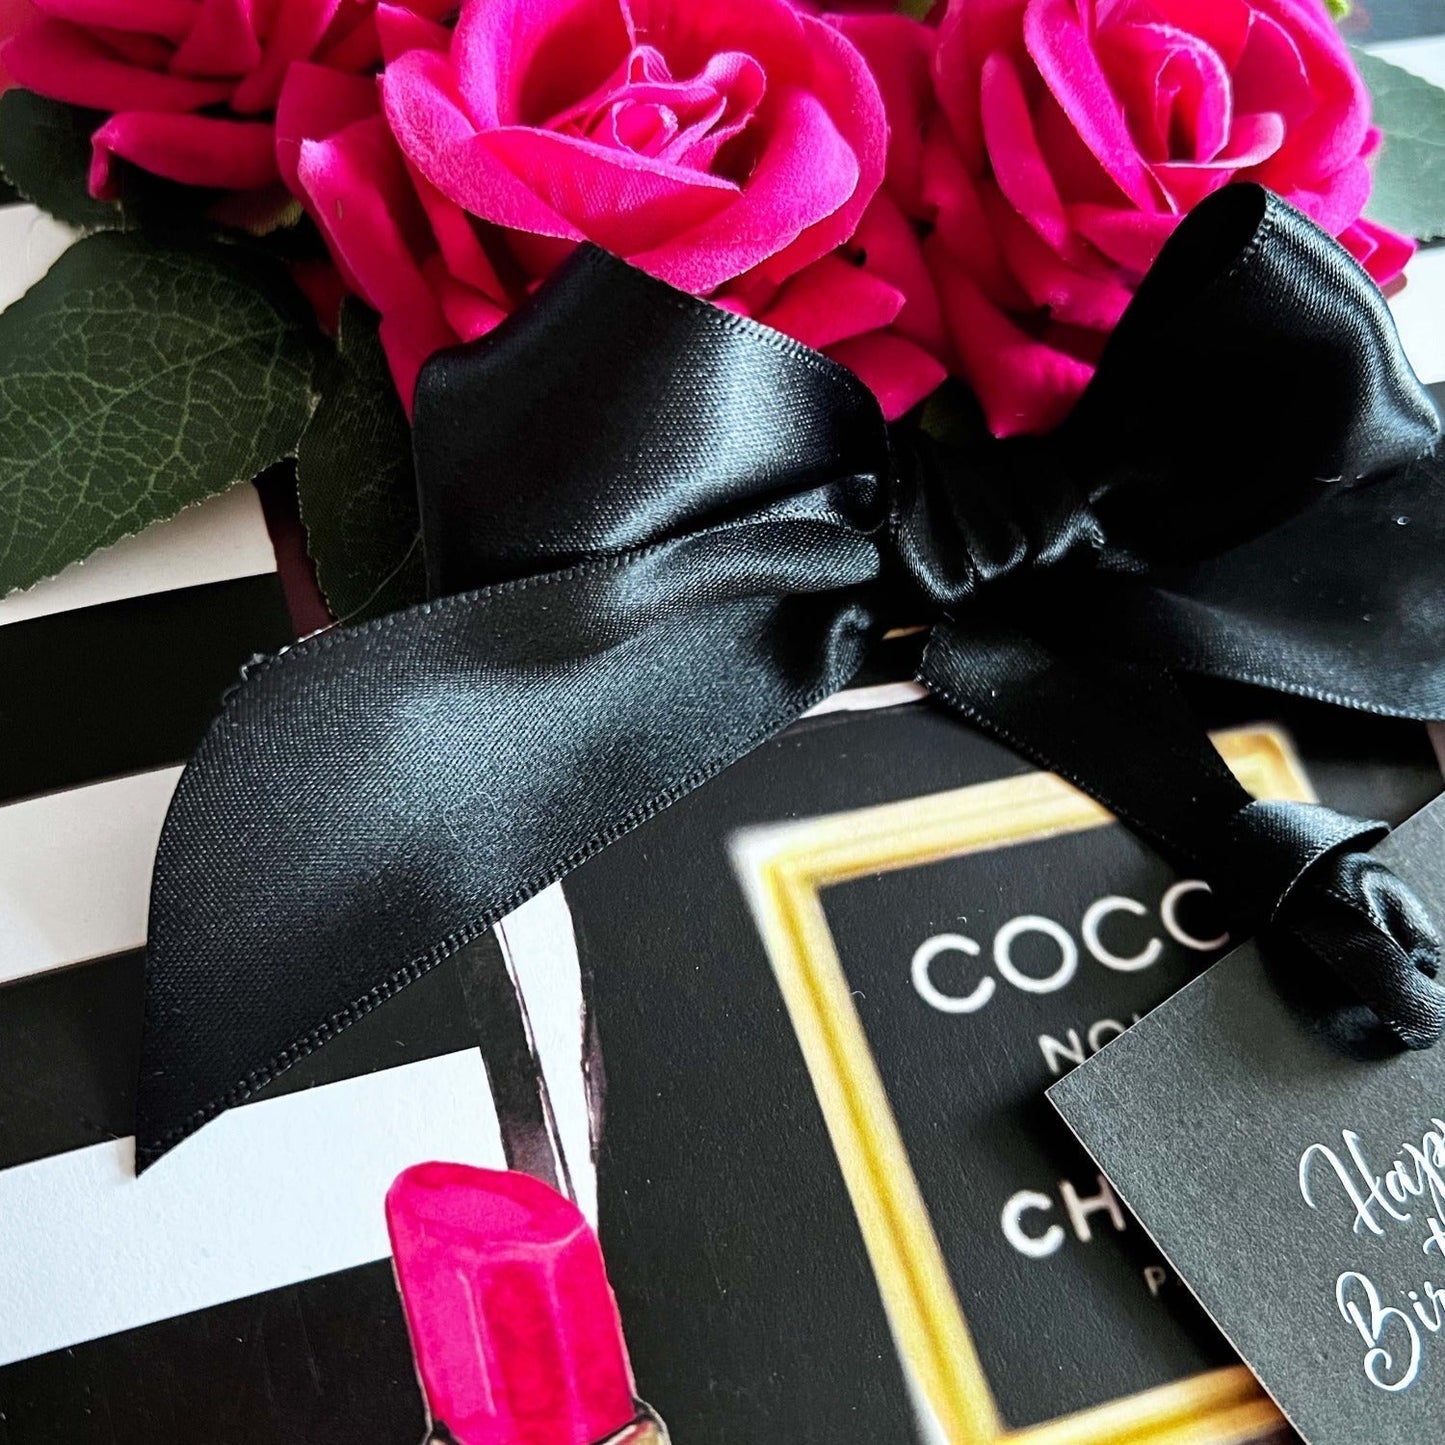 Wife Chanel pink lipstick and perfume luxury handmade birthday cards